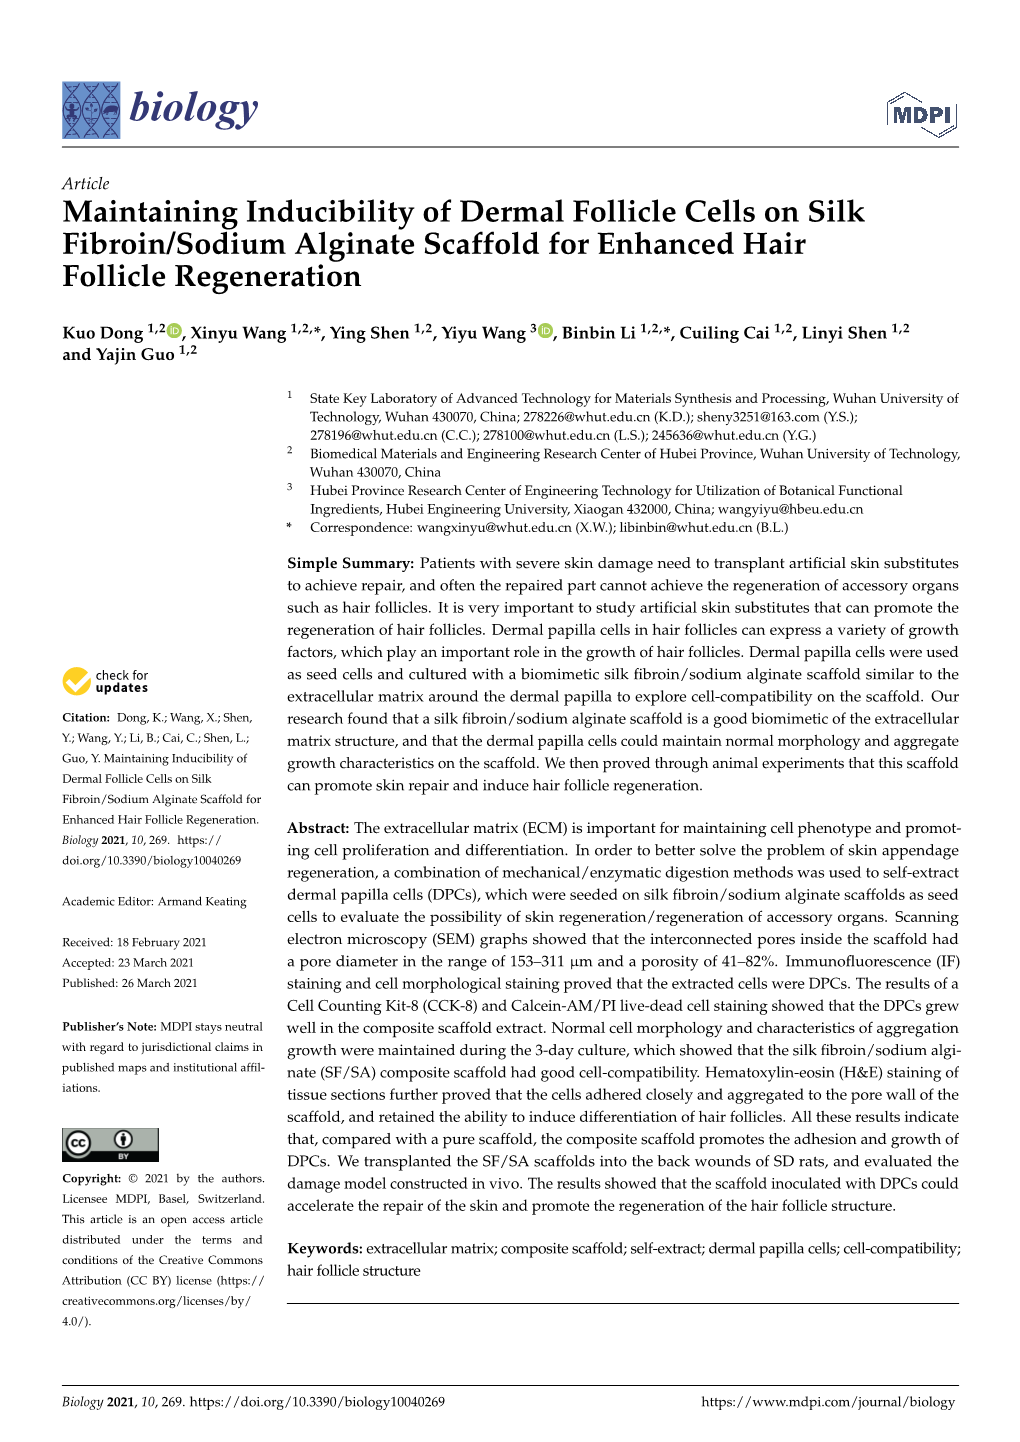 Maintaining Inducibility of Dermal Follicle Cells on Silk Fibroin/Sodium Alginate Scaffold for Enhanced Hair Follicle Regeneration